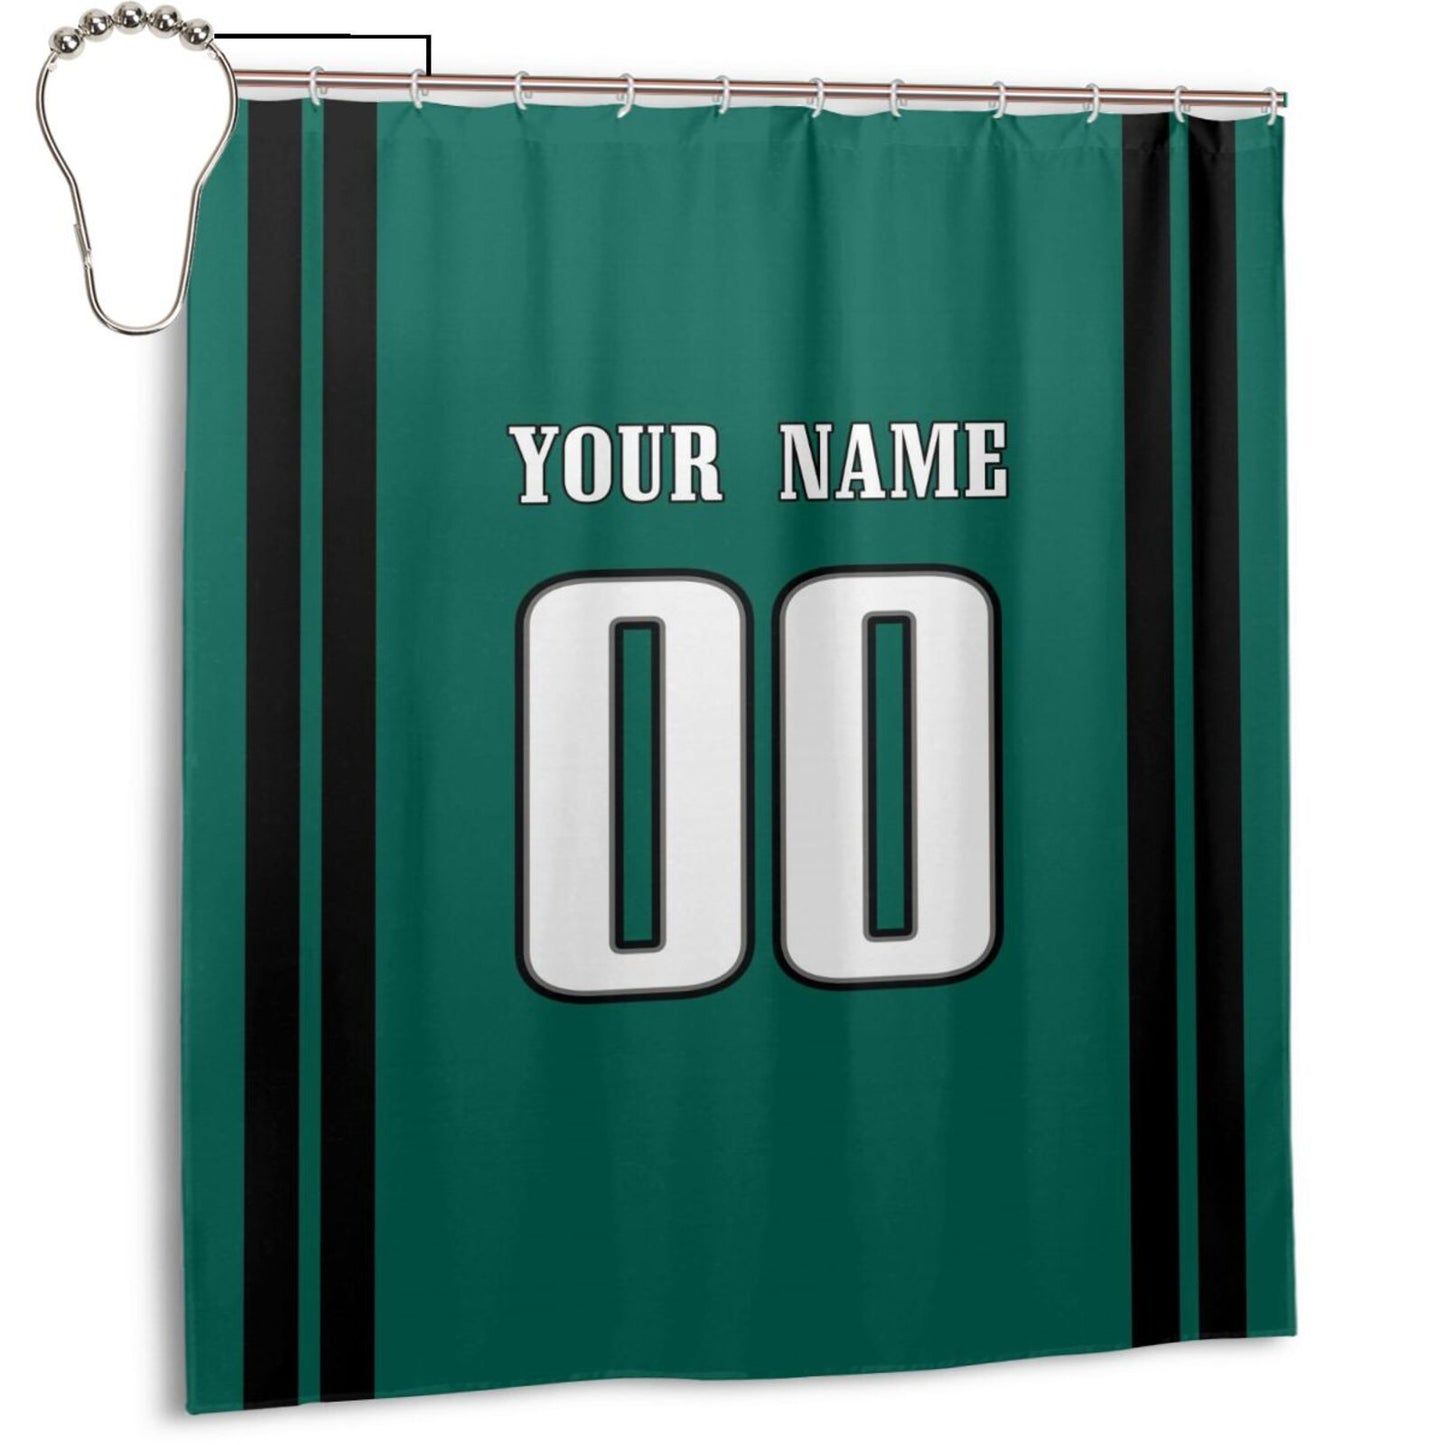 Custom Football Philadelphia Eagles style personalized shower curtain custom design name and number set of 12 shower curtain hooks Rings